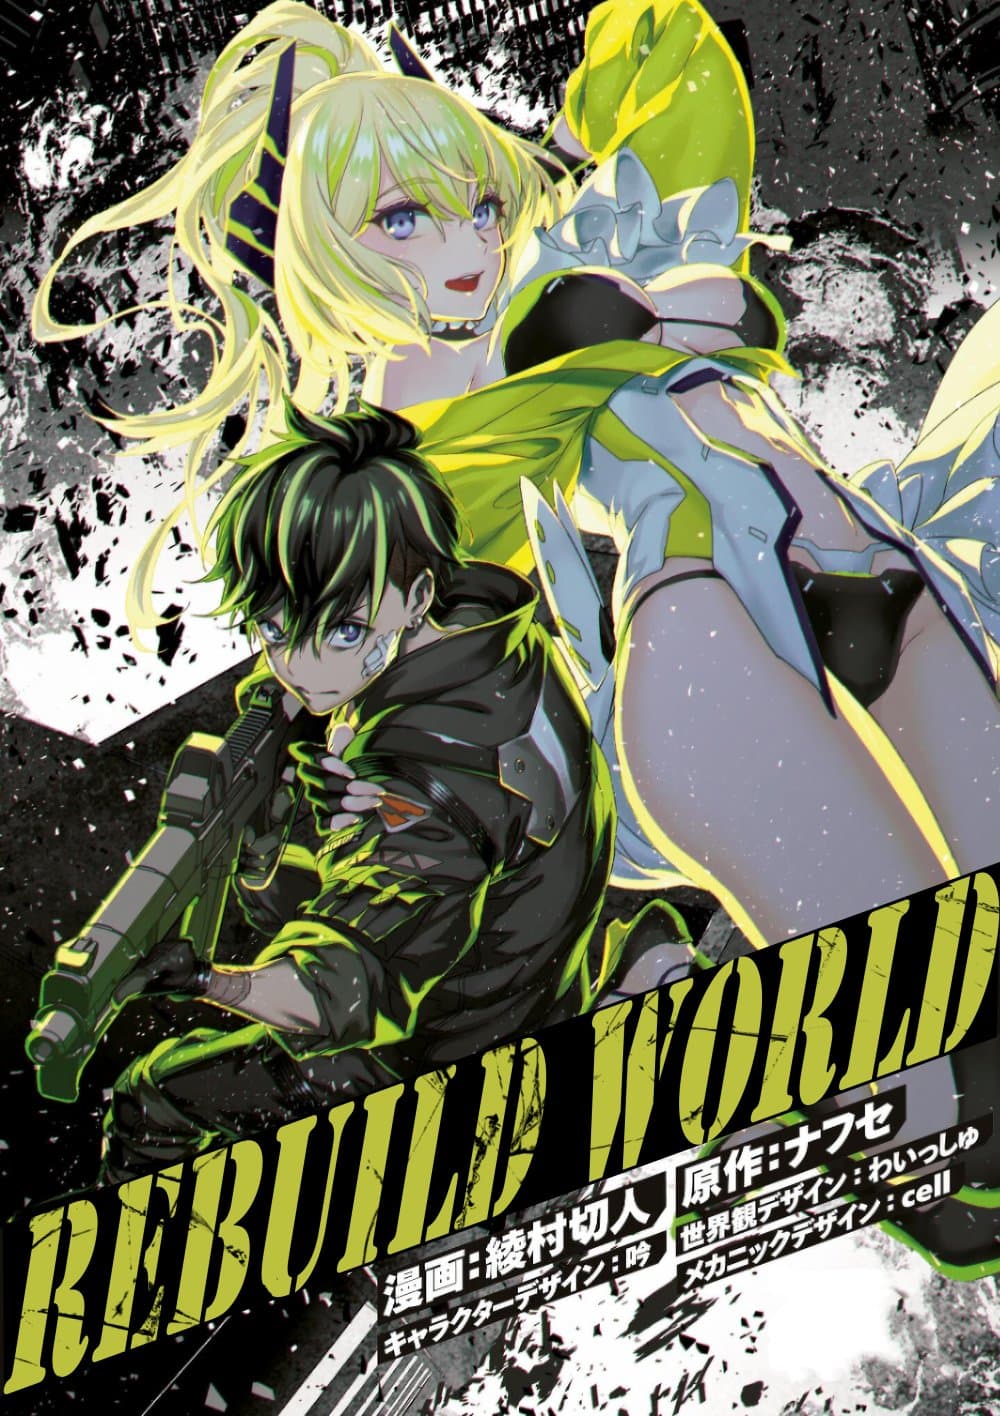 Rebuild World 25 (1)